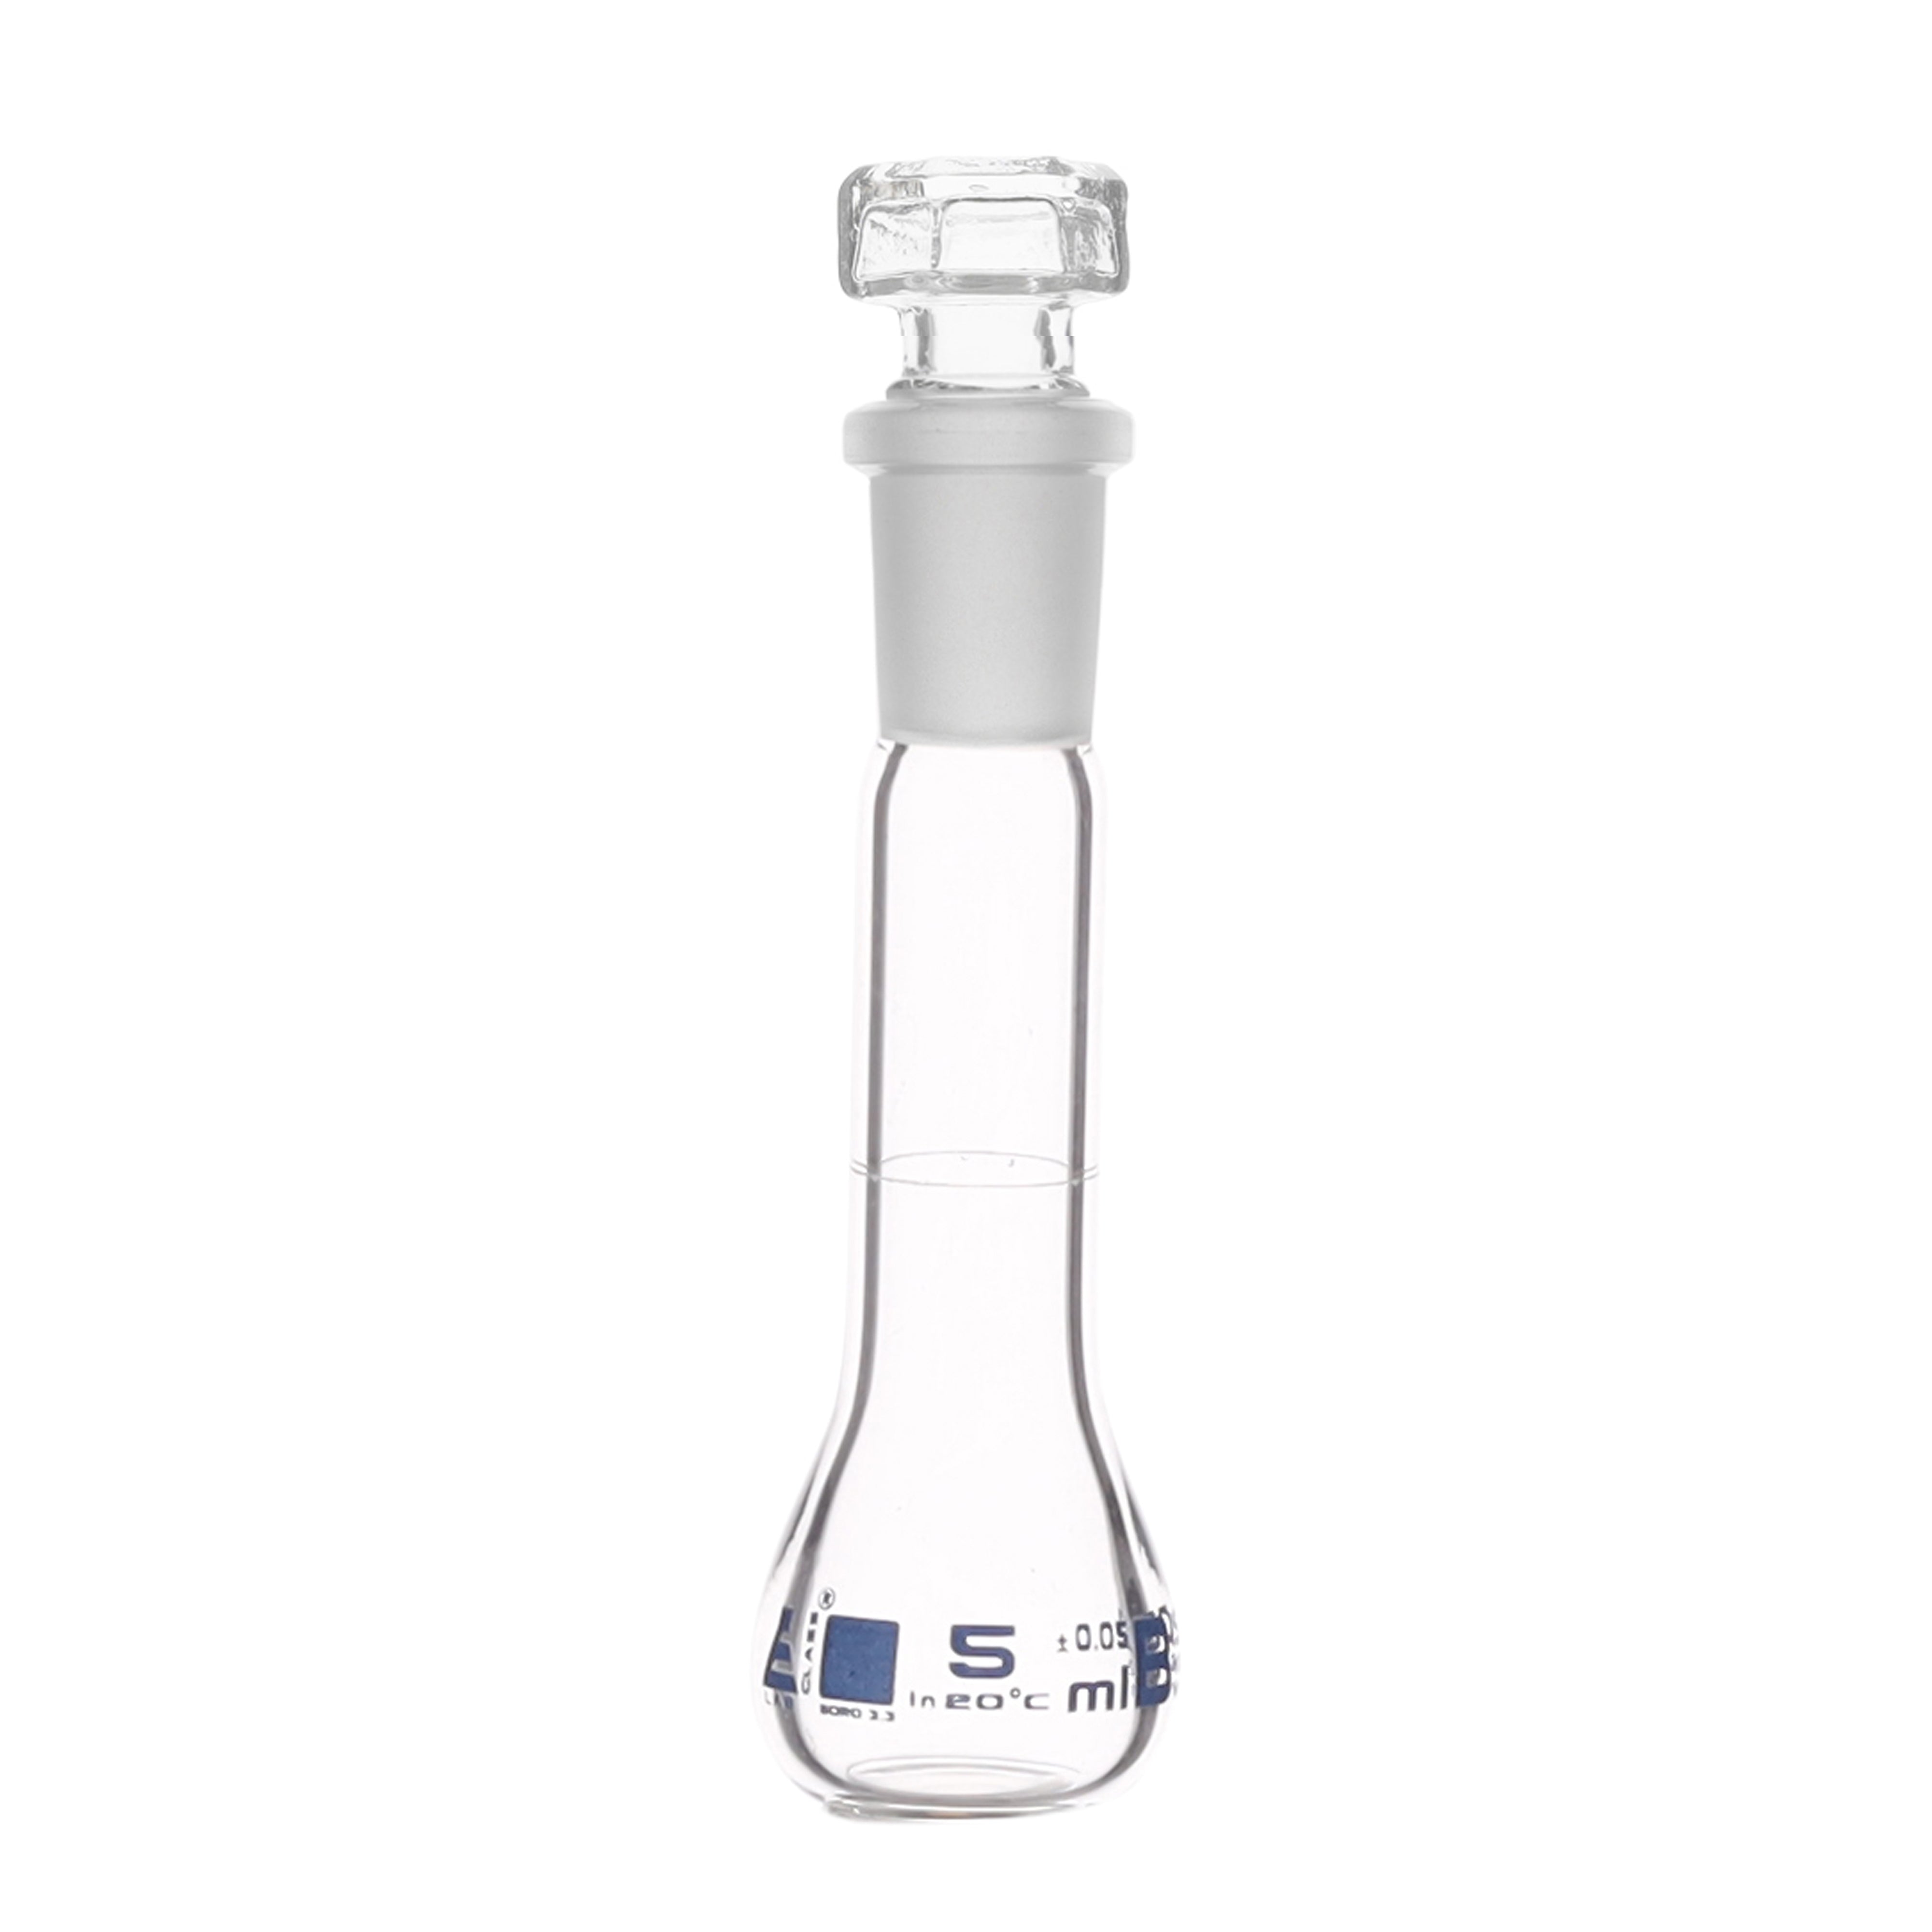 Borosilicate Volumetric Flask with Hollow Glass Stopper, 5ml, Class B, Blue Print, Autoclavable